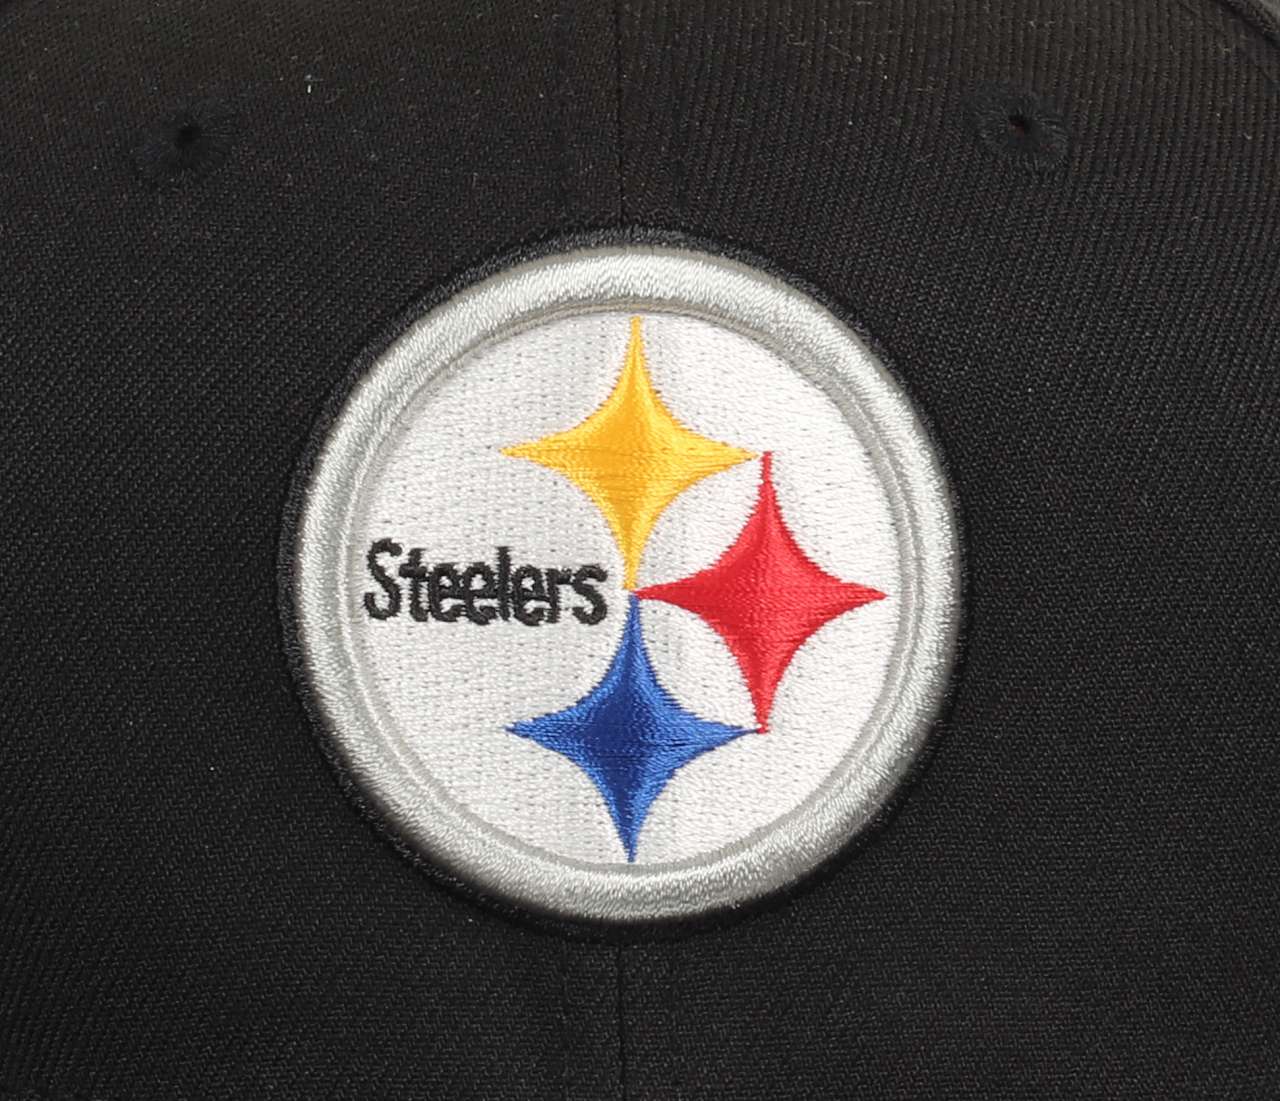 Pittsburgh Steelers NFL Black OTC 9Fifty Original Fit Snapback Cap New Era